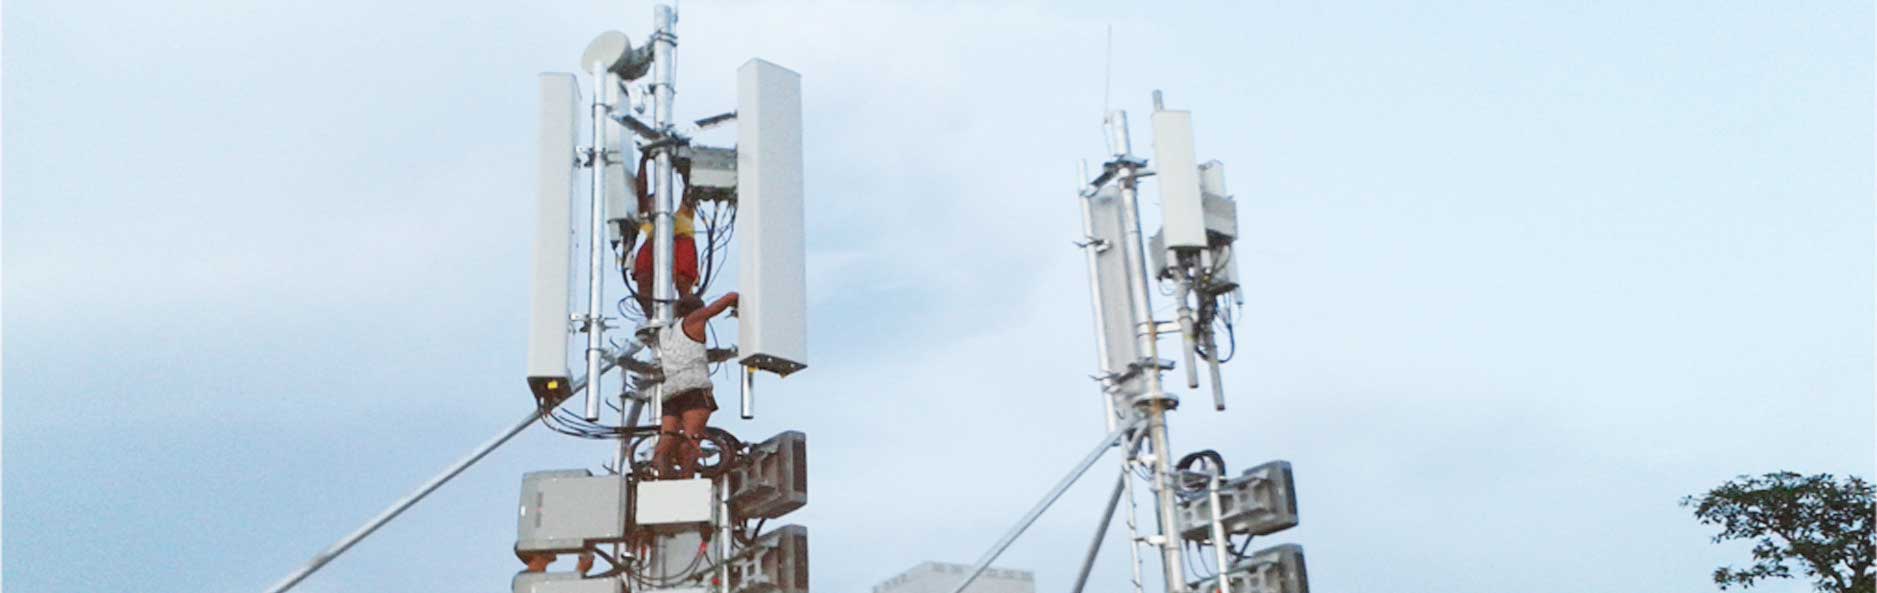 Telecom Tower Installation